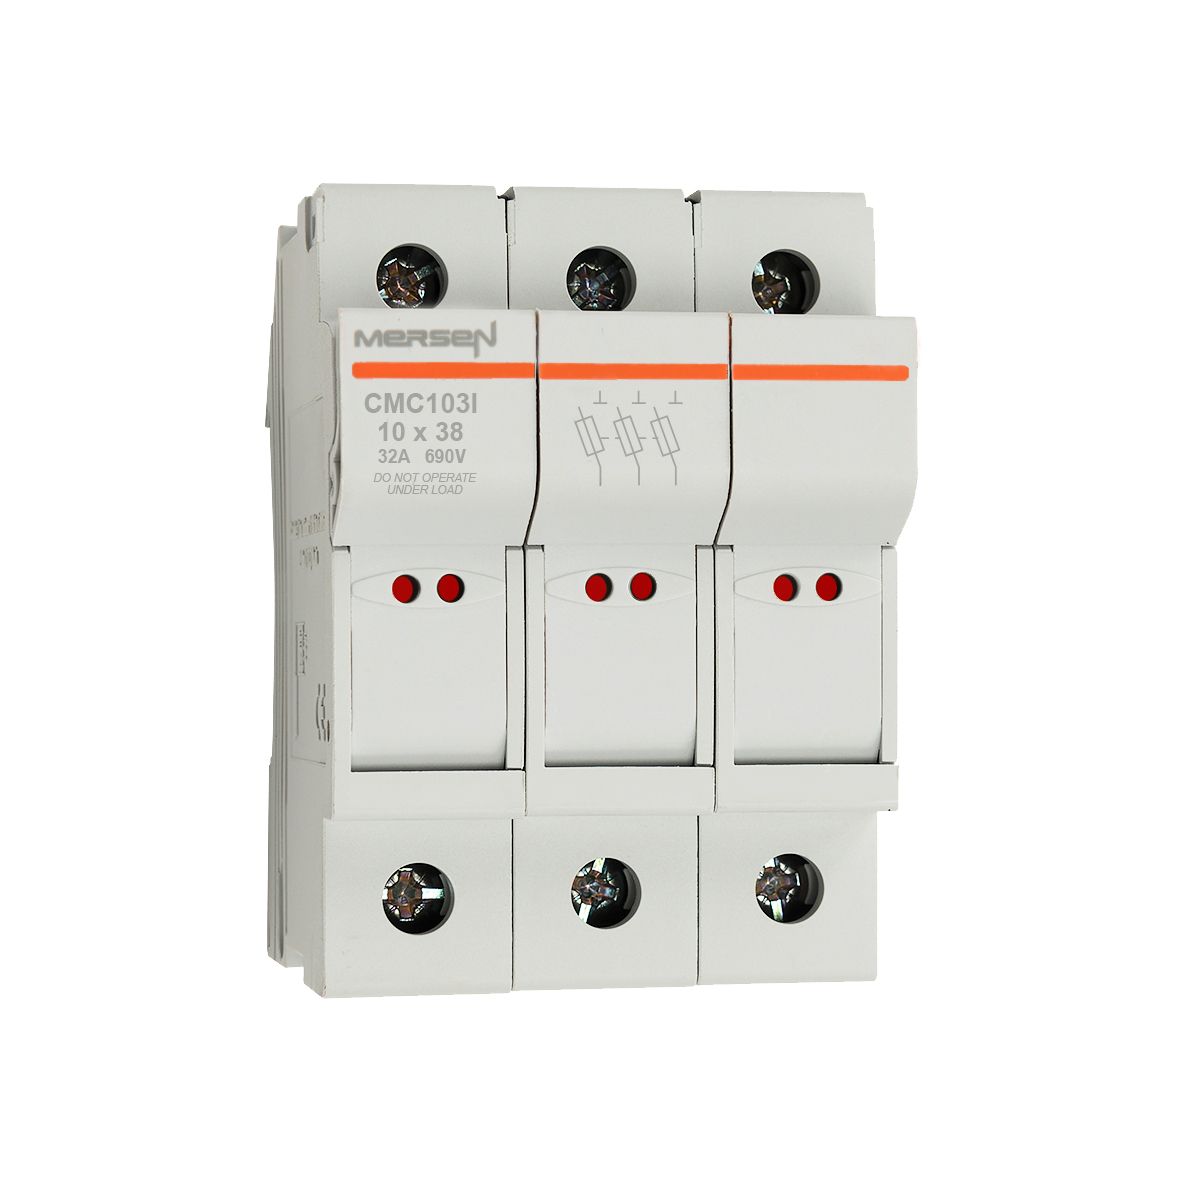 F1062697 - CMC10 modular fuse holder,IEC,3P,indicator light,10x38,DIN rail mounting,IP20